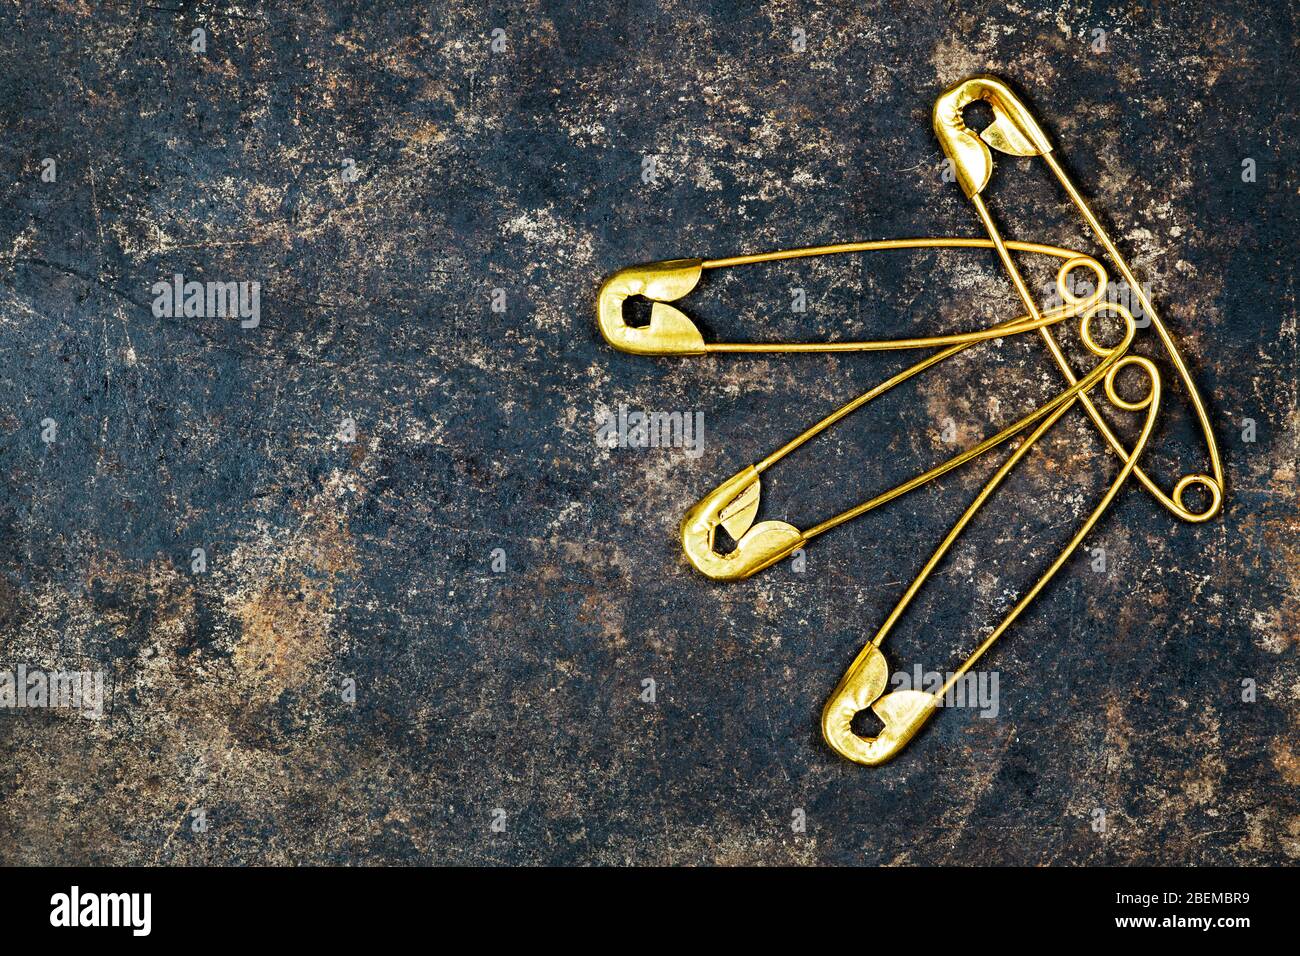 Concepto de relación humana, grupo de pines de seguridad de oro conectados sobre fondo metálico oxidado Foto de stock